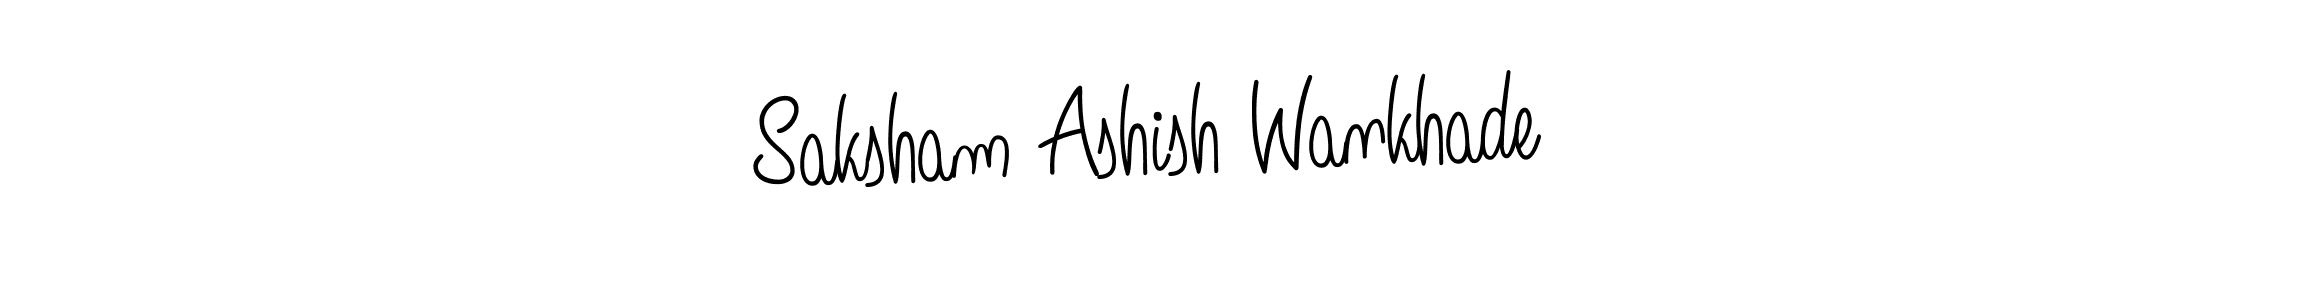 Best and Professional Signature Style for Saksham Ashish Wankhade. Angelique-Rose-font-FFP Best Signature Style Collection. Saksham Ashish Wankhade signature style 5 images and pictures png